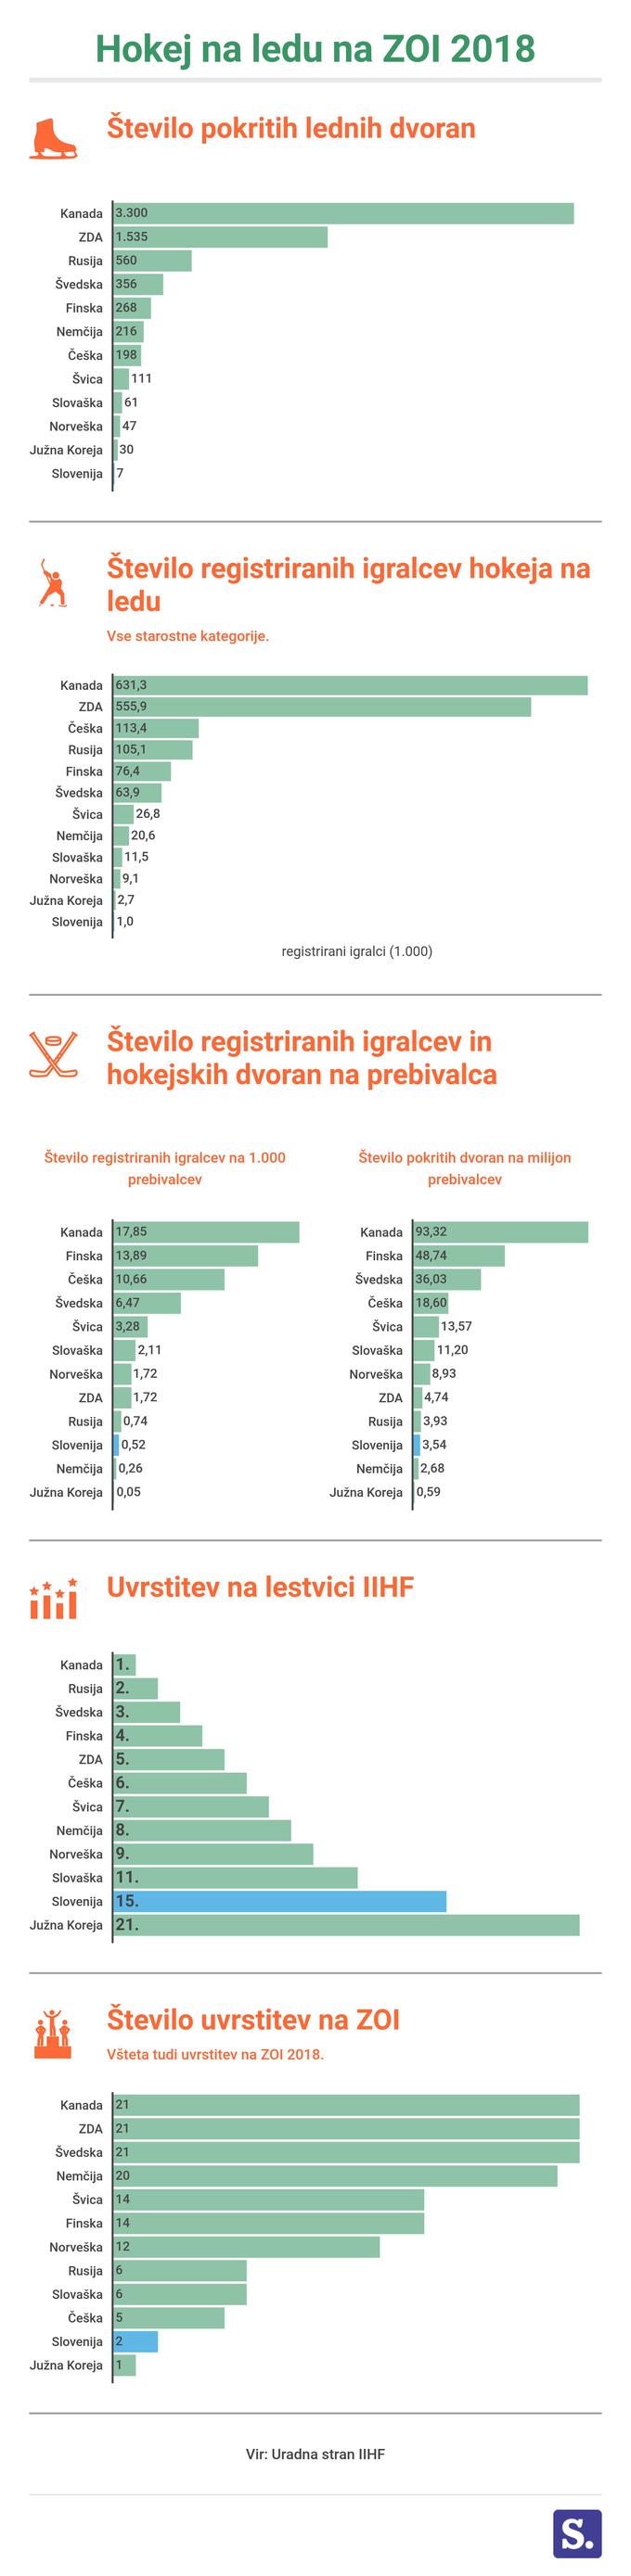 slovenski hokej infografika | Foto: Marjan Žlogar